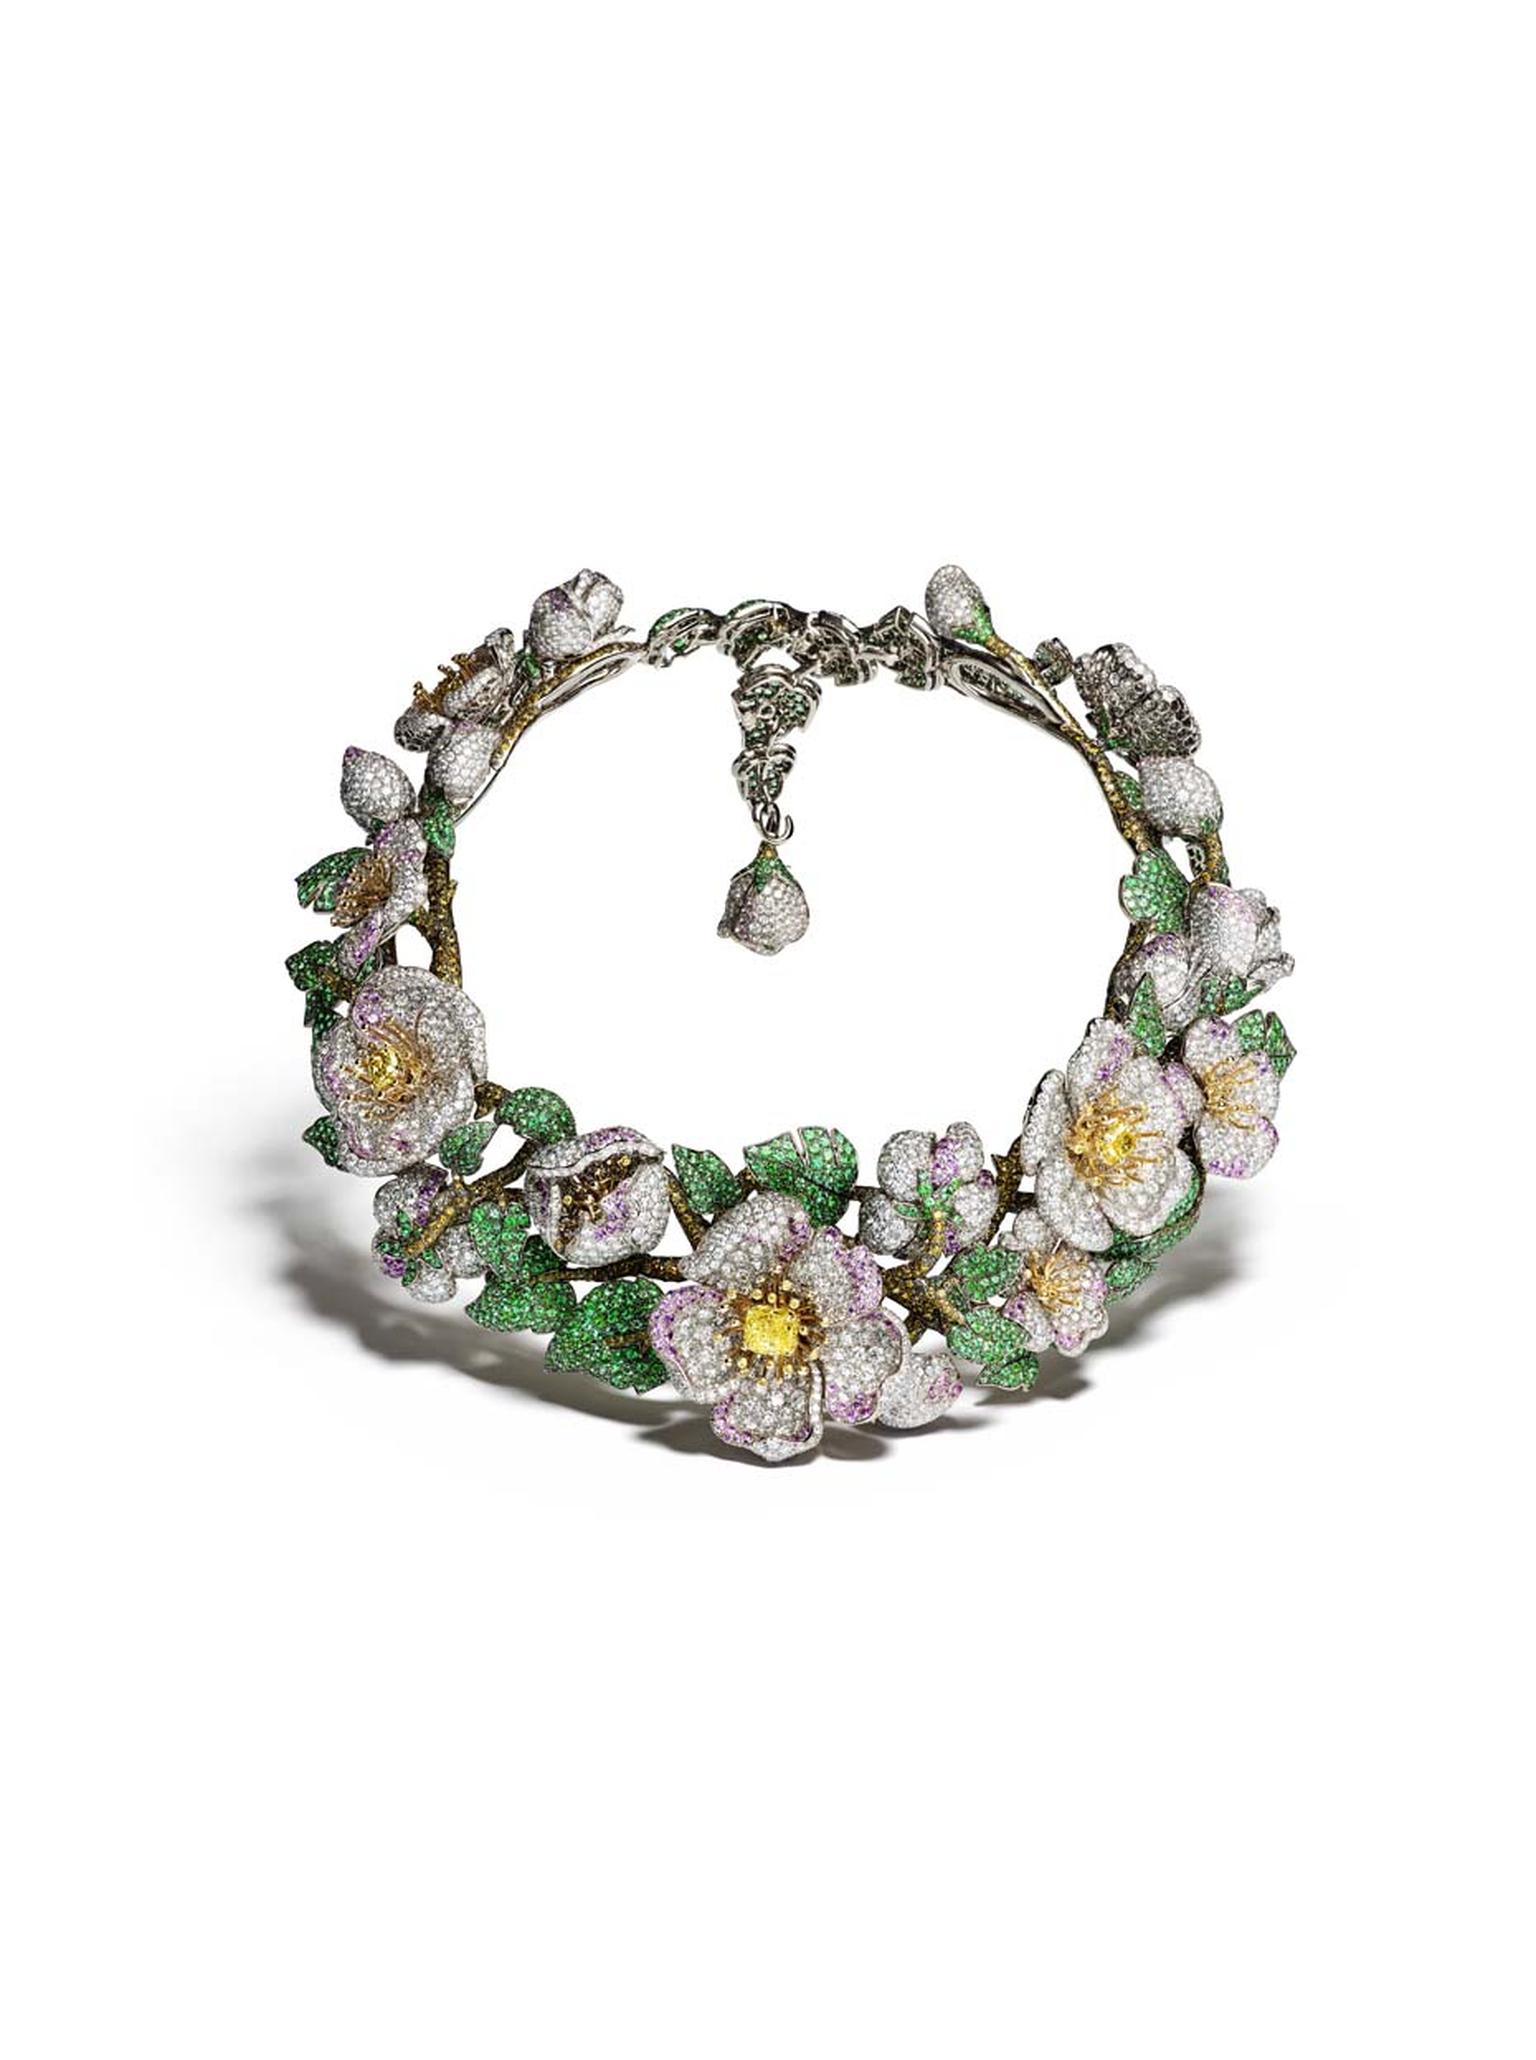 Giampiero Bodino Rosa dei Venti necklace in white gold featuring emeralds, amethysts, diamonds and black spinels. Image by: Laziz Hamani